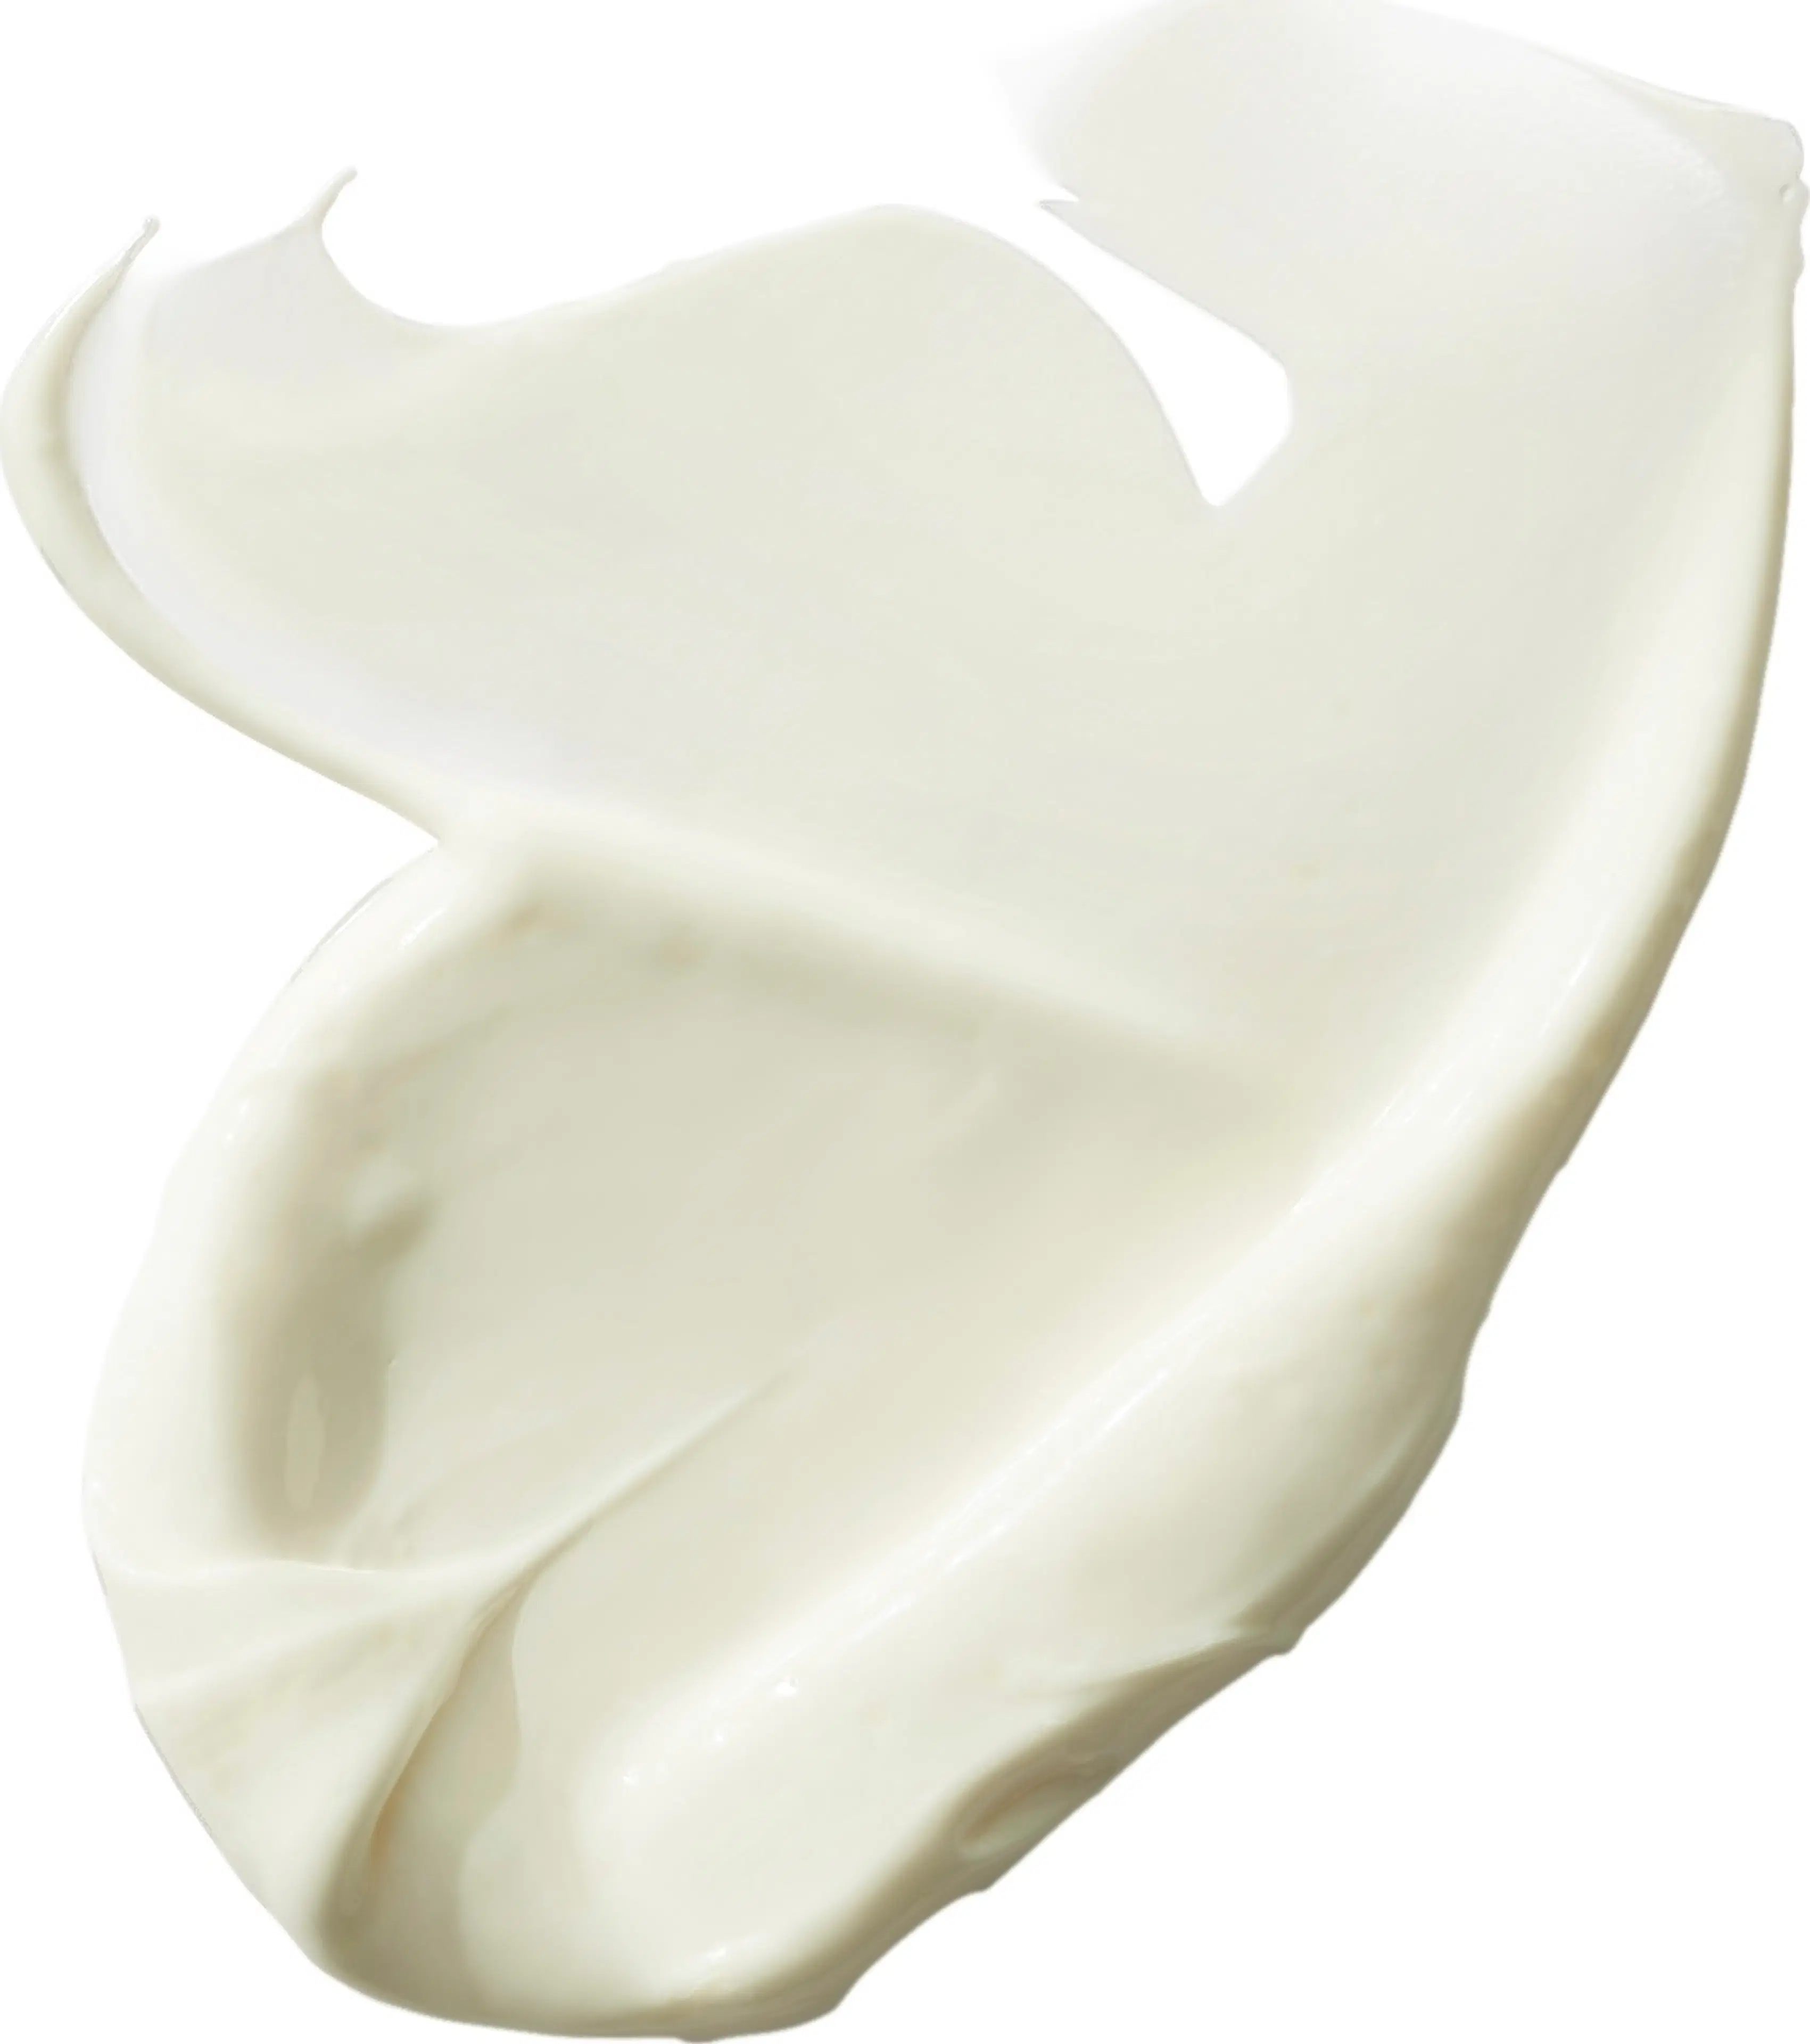 Clinique Smart Clinical Repair SPF 30 Wrinkle Correcting Cream päivävoide 50 ml